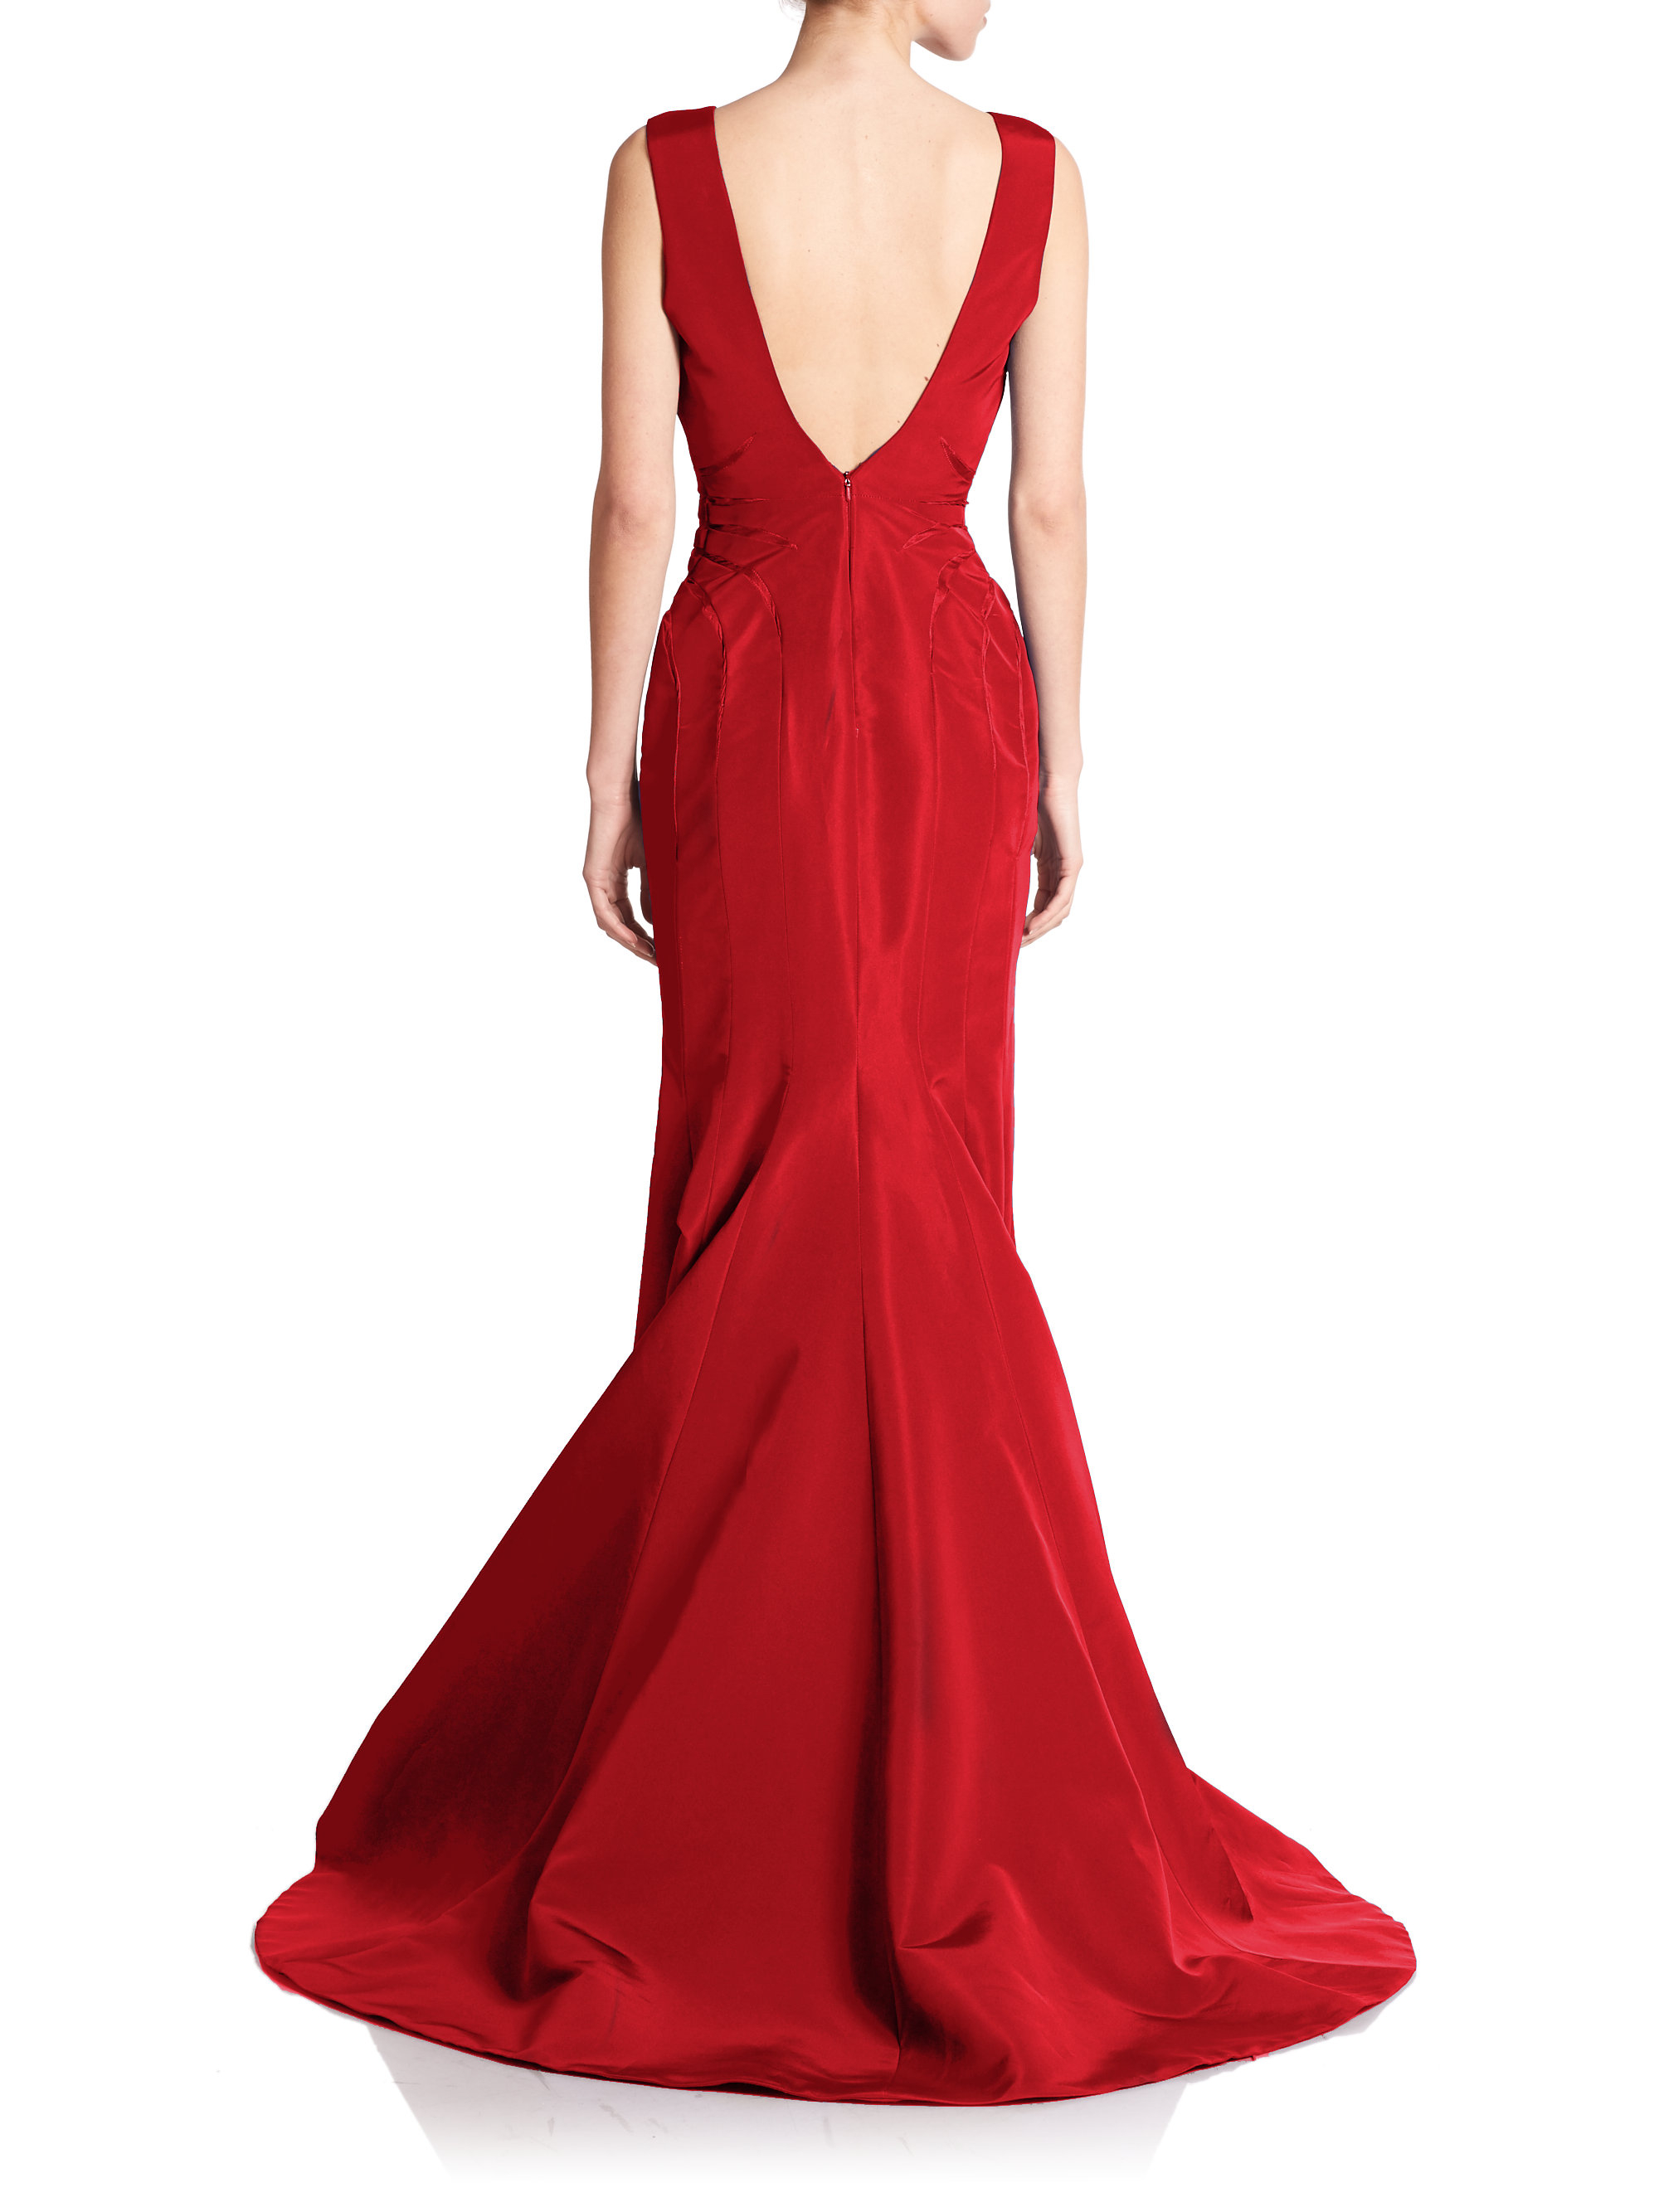 Lyst - Zac Posen Sleevless Silk Mermaid Gown in Red